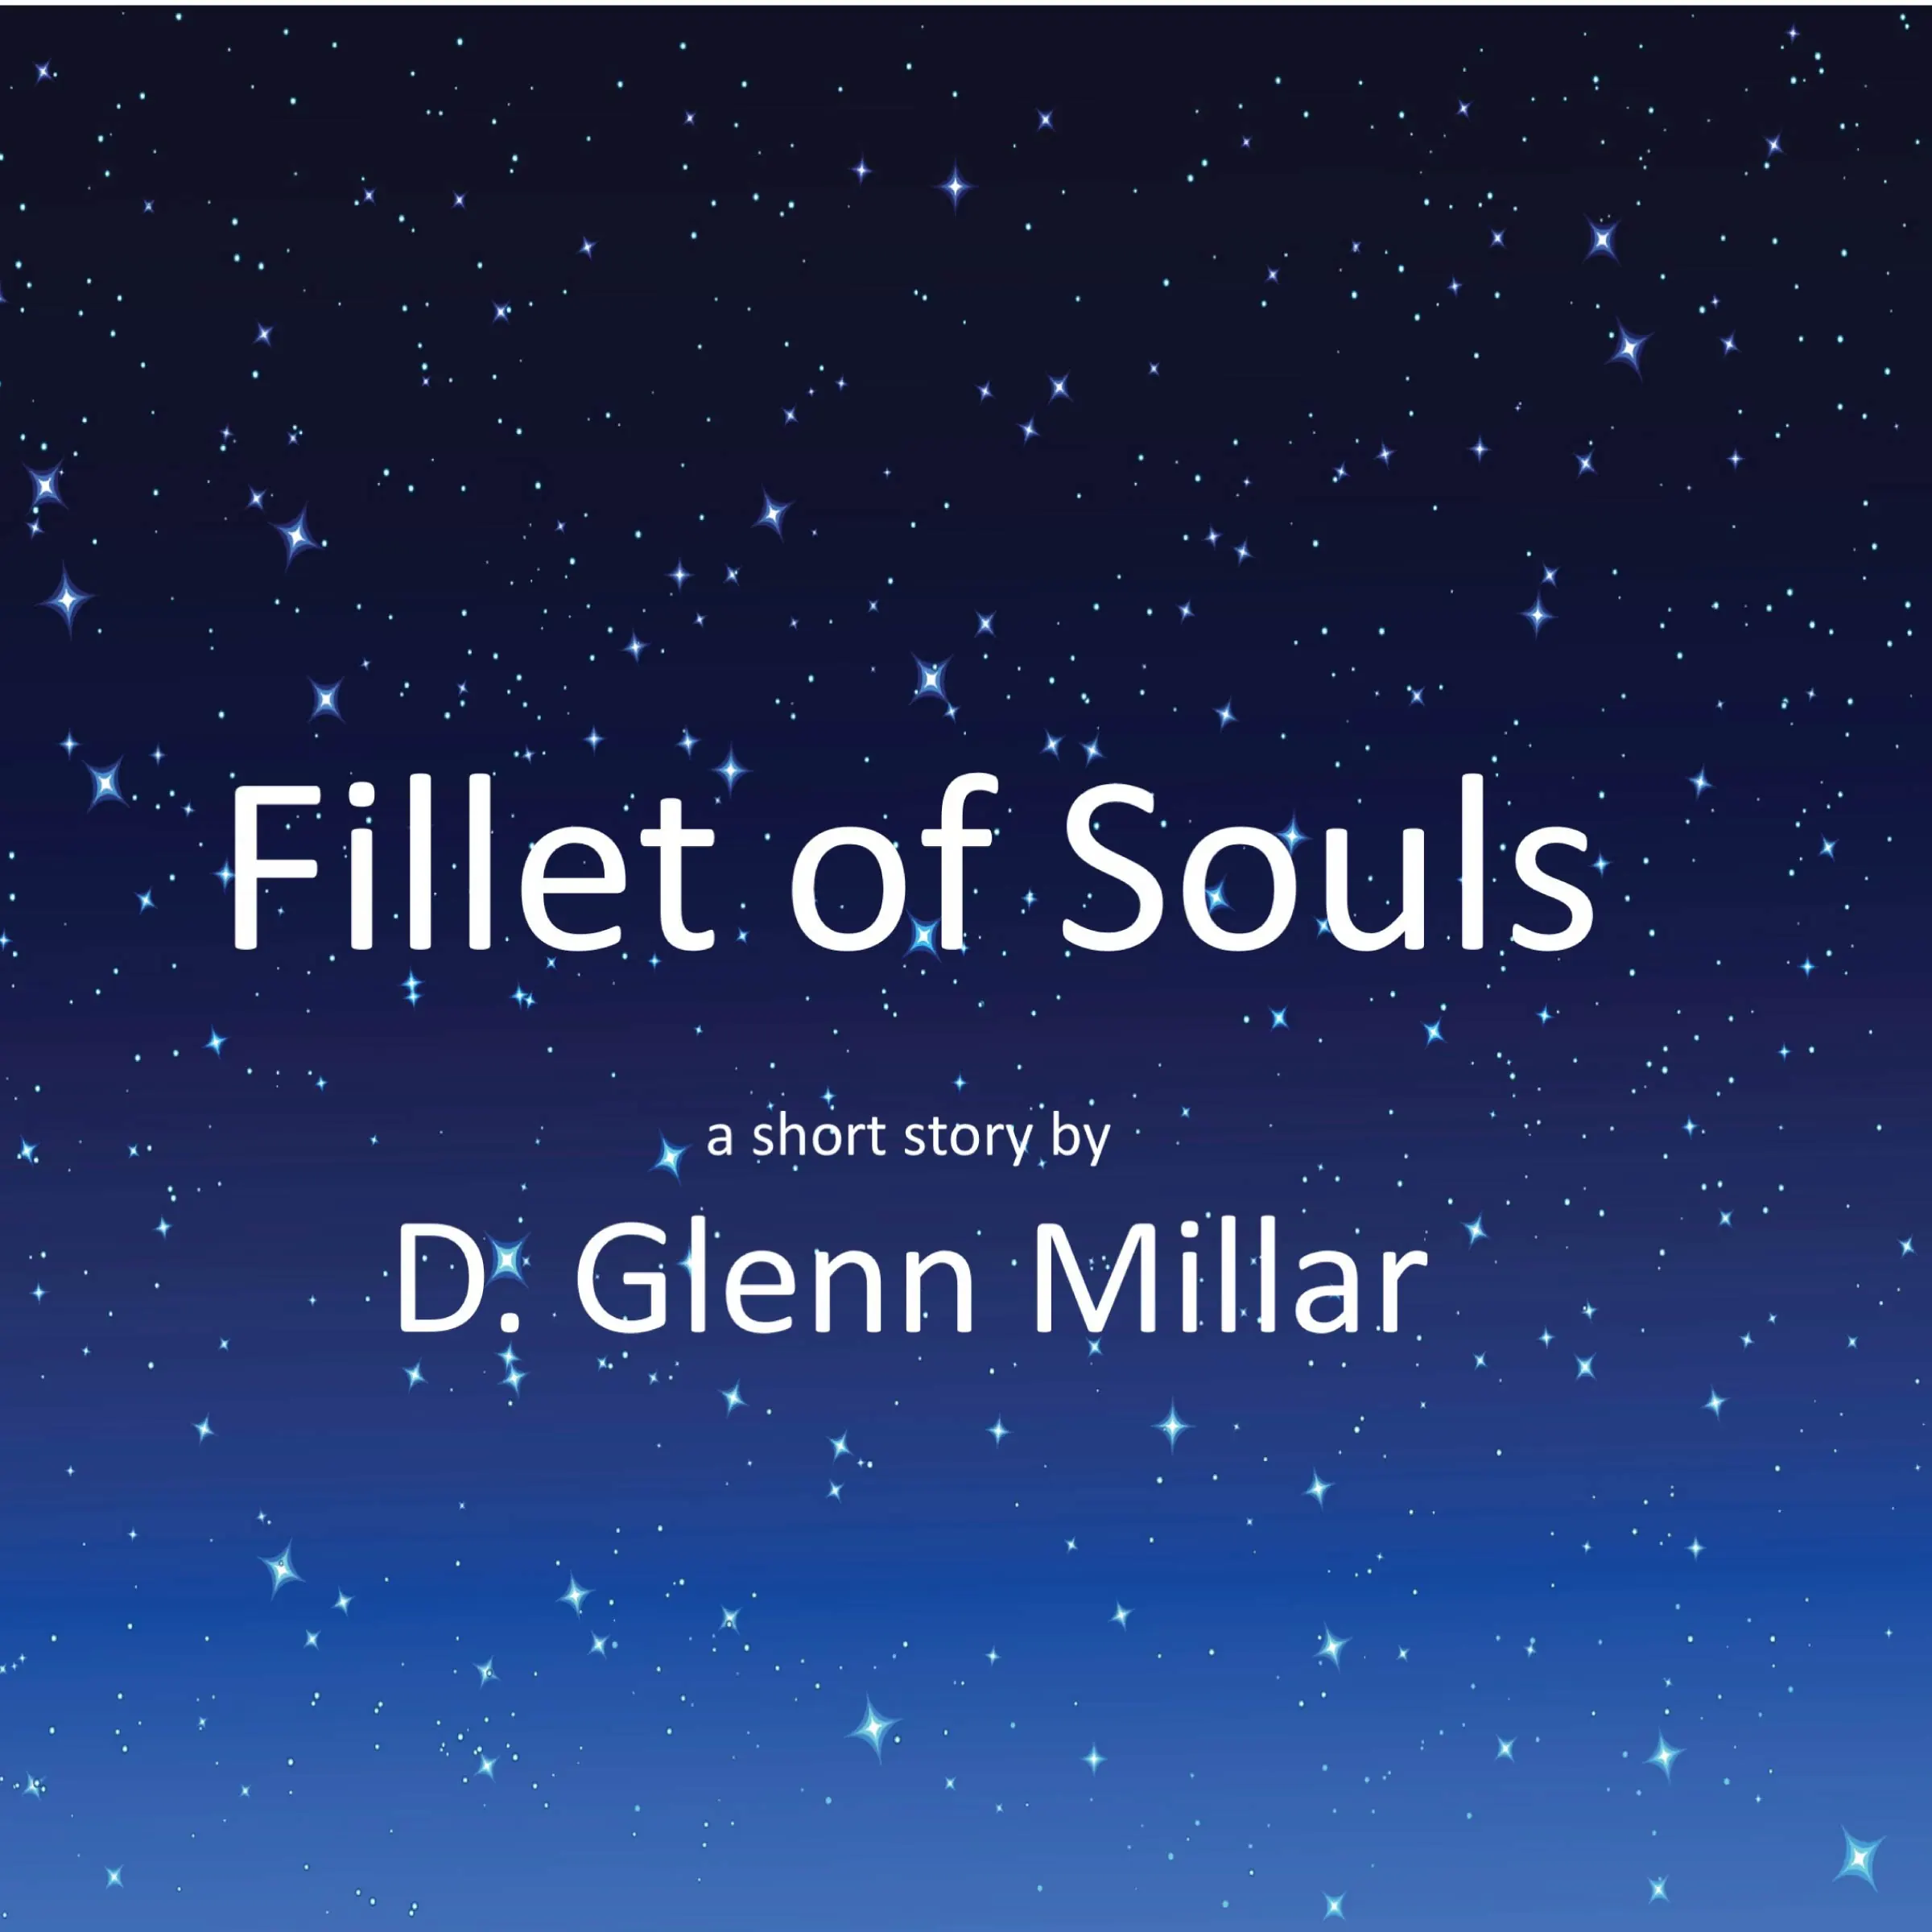 Fillet of Souls by D. Glenn Millar Audiobook